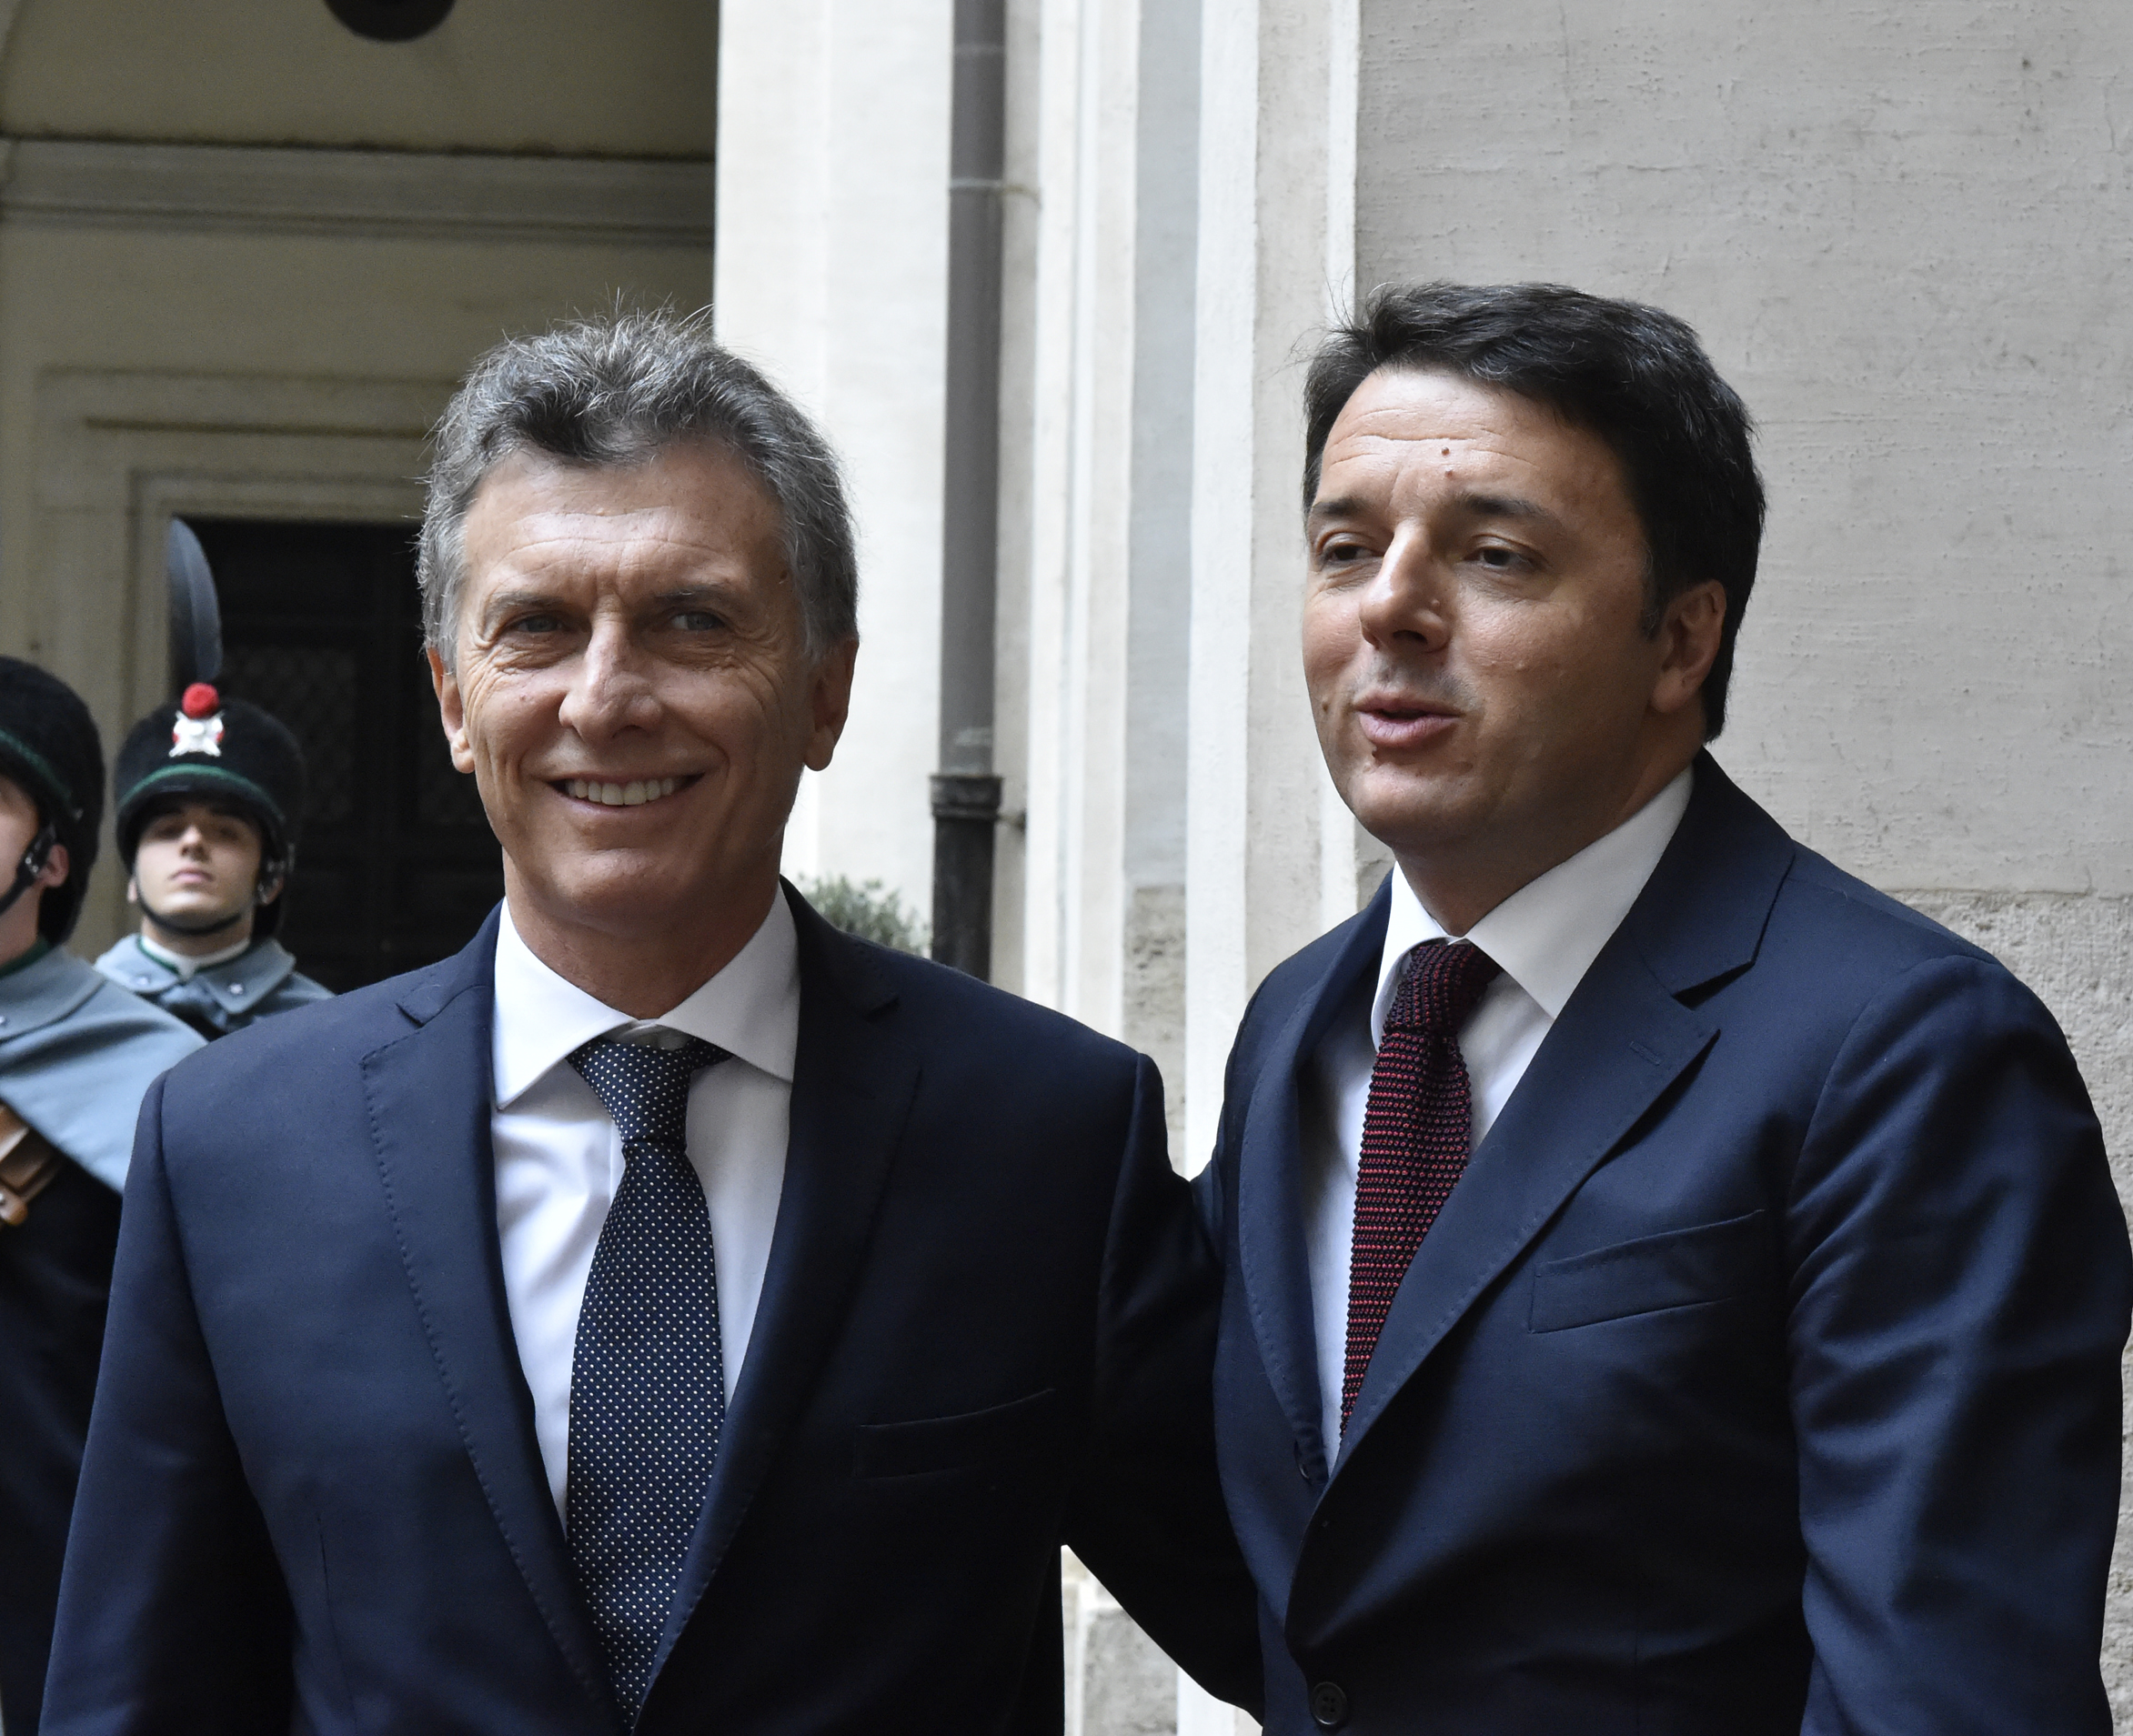 El Presidente se reunió con el Primer Ministro de Italia, Matteo Renzi.